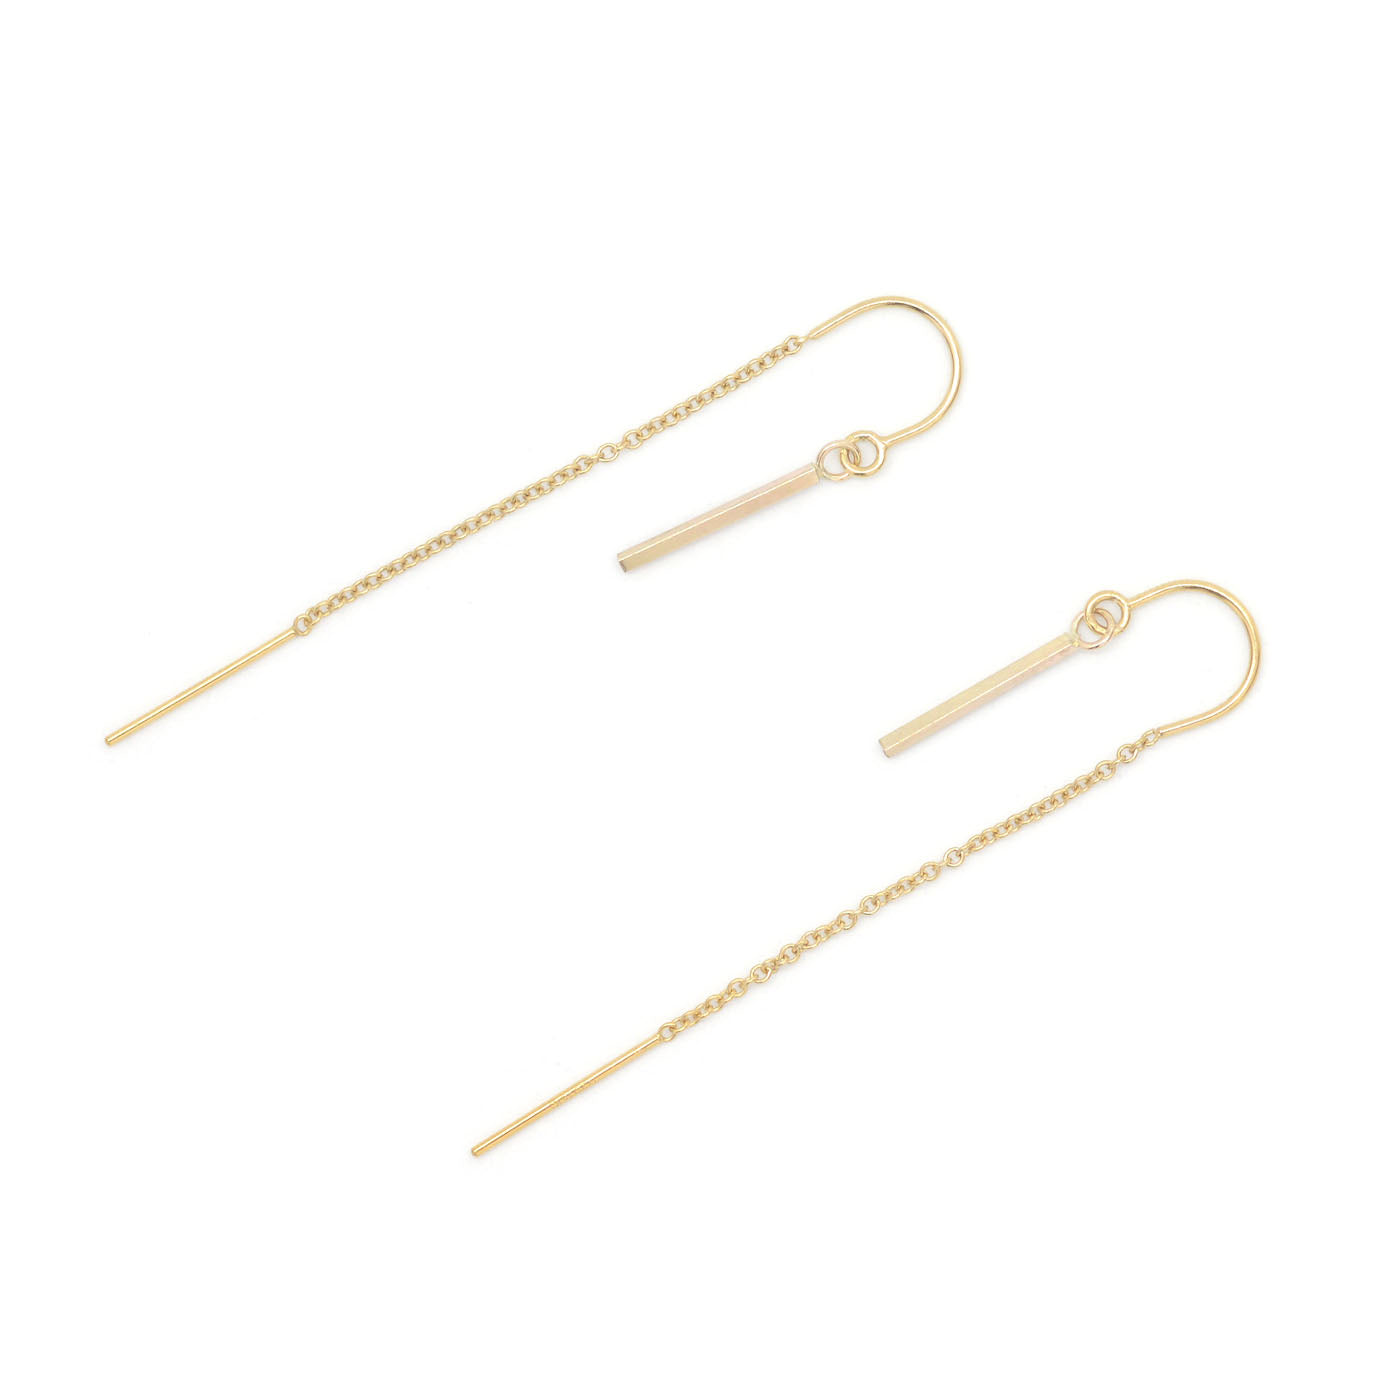 Minimal Tinsel Ear Thread Earrings - Favor Jewelry